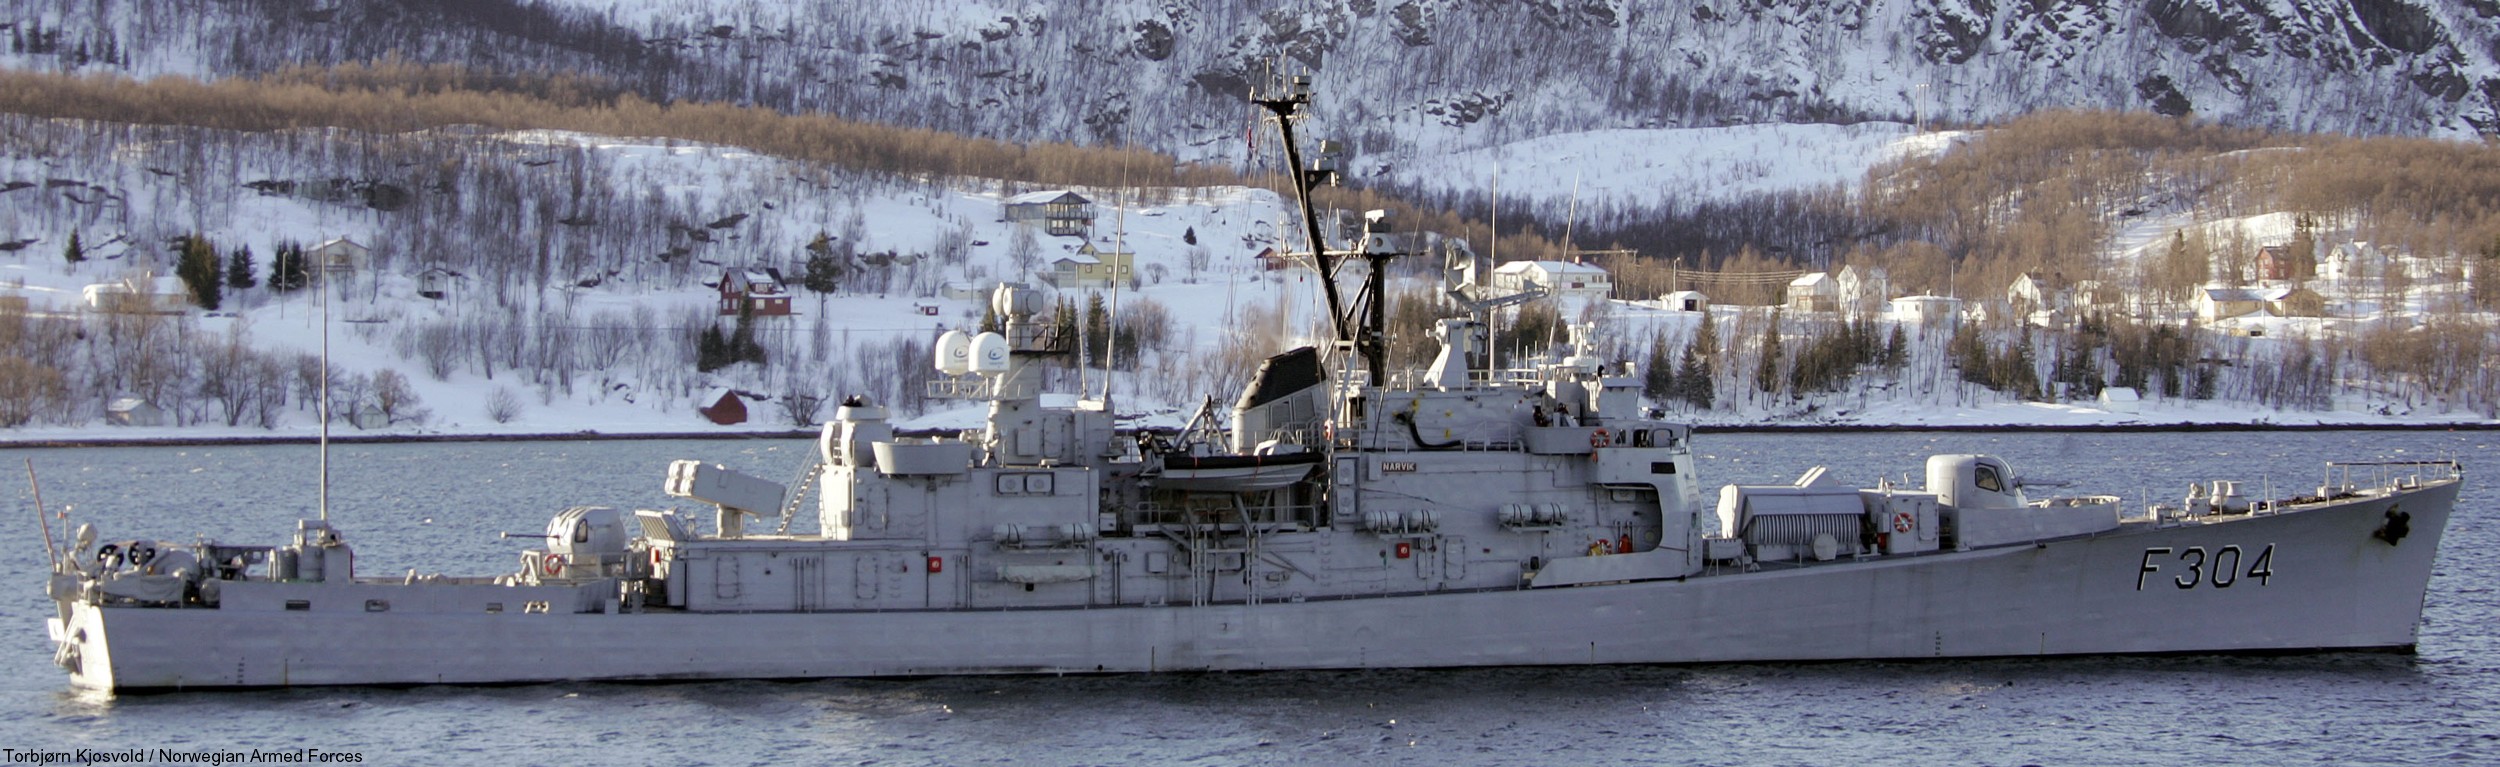 f-304 hnoms narvik knm oslo class frigate royal norwegian navy sjoforsvaret 04